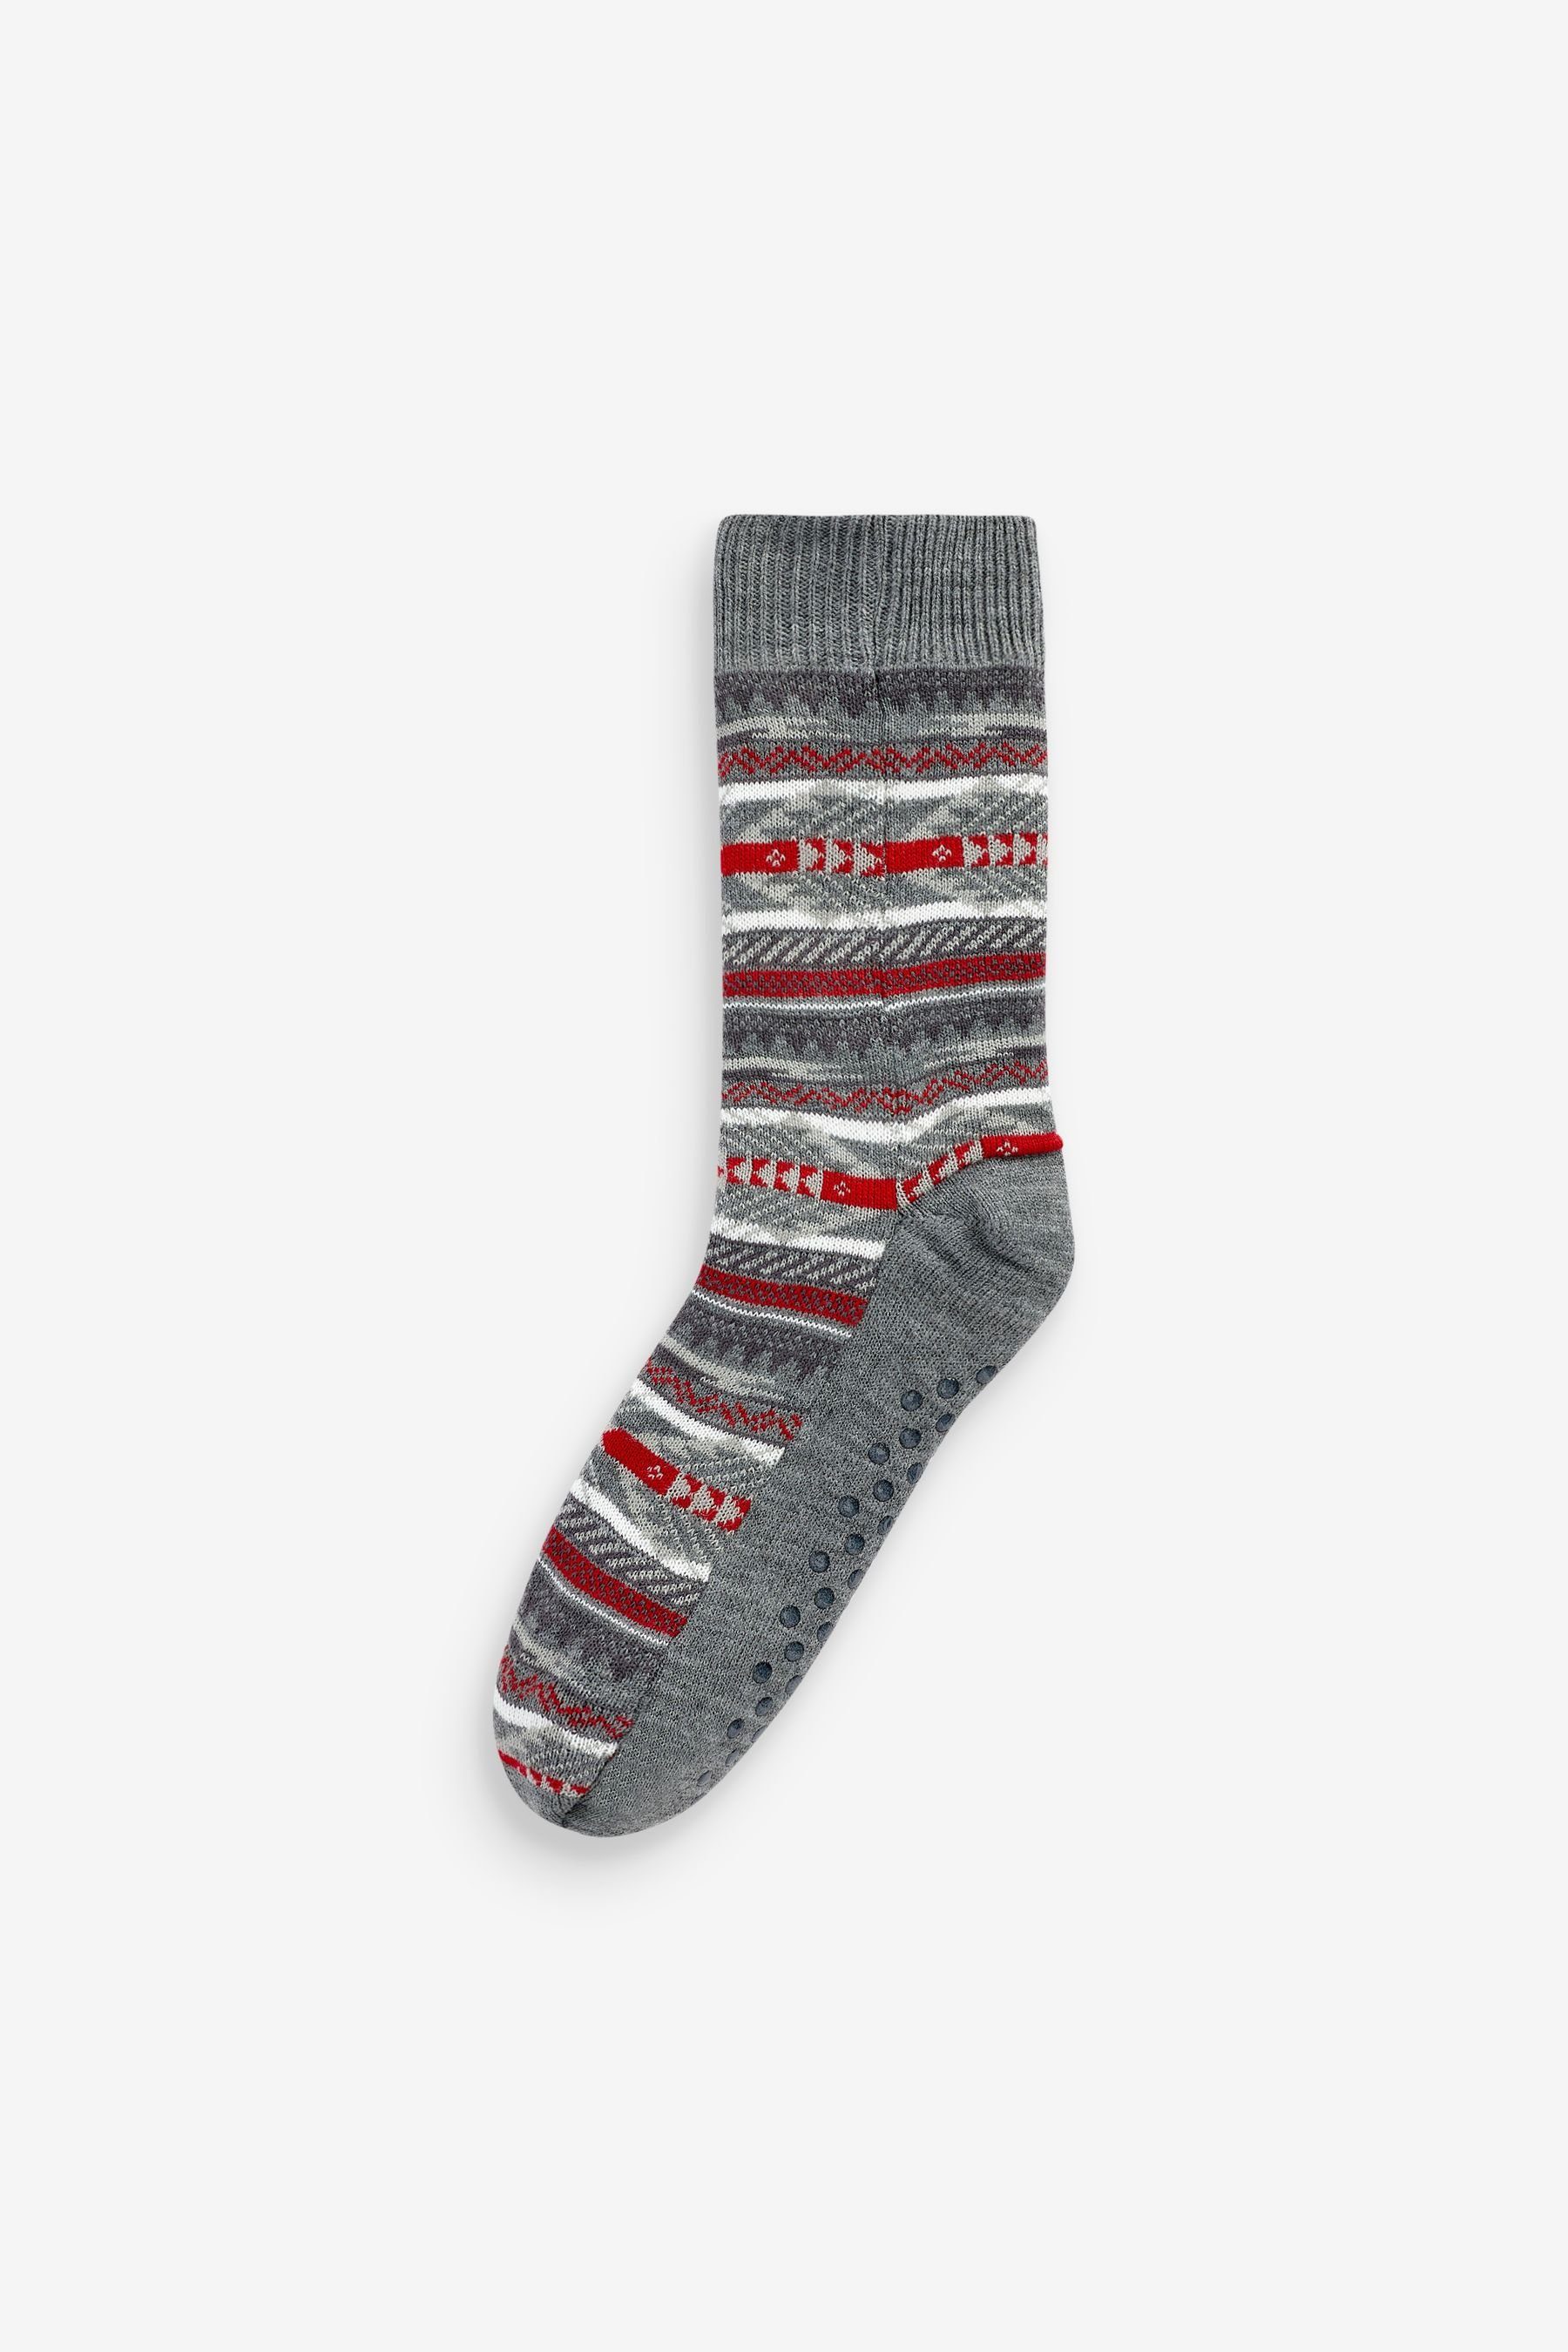 Next Slipper-Socken Zopfmuster (1-Paar) Haussocken Grey Print Aztec mit